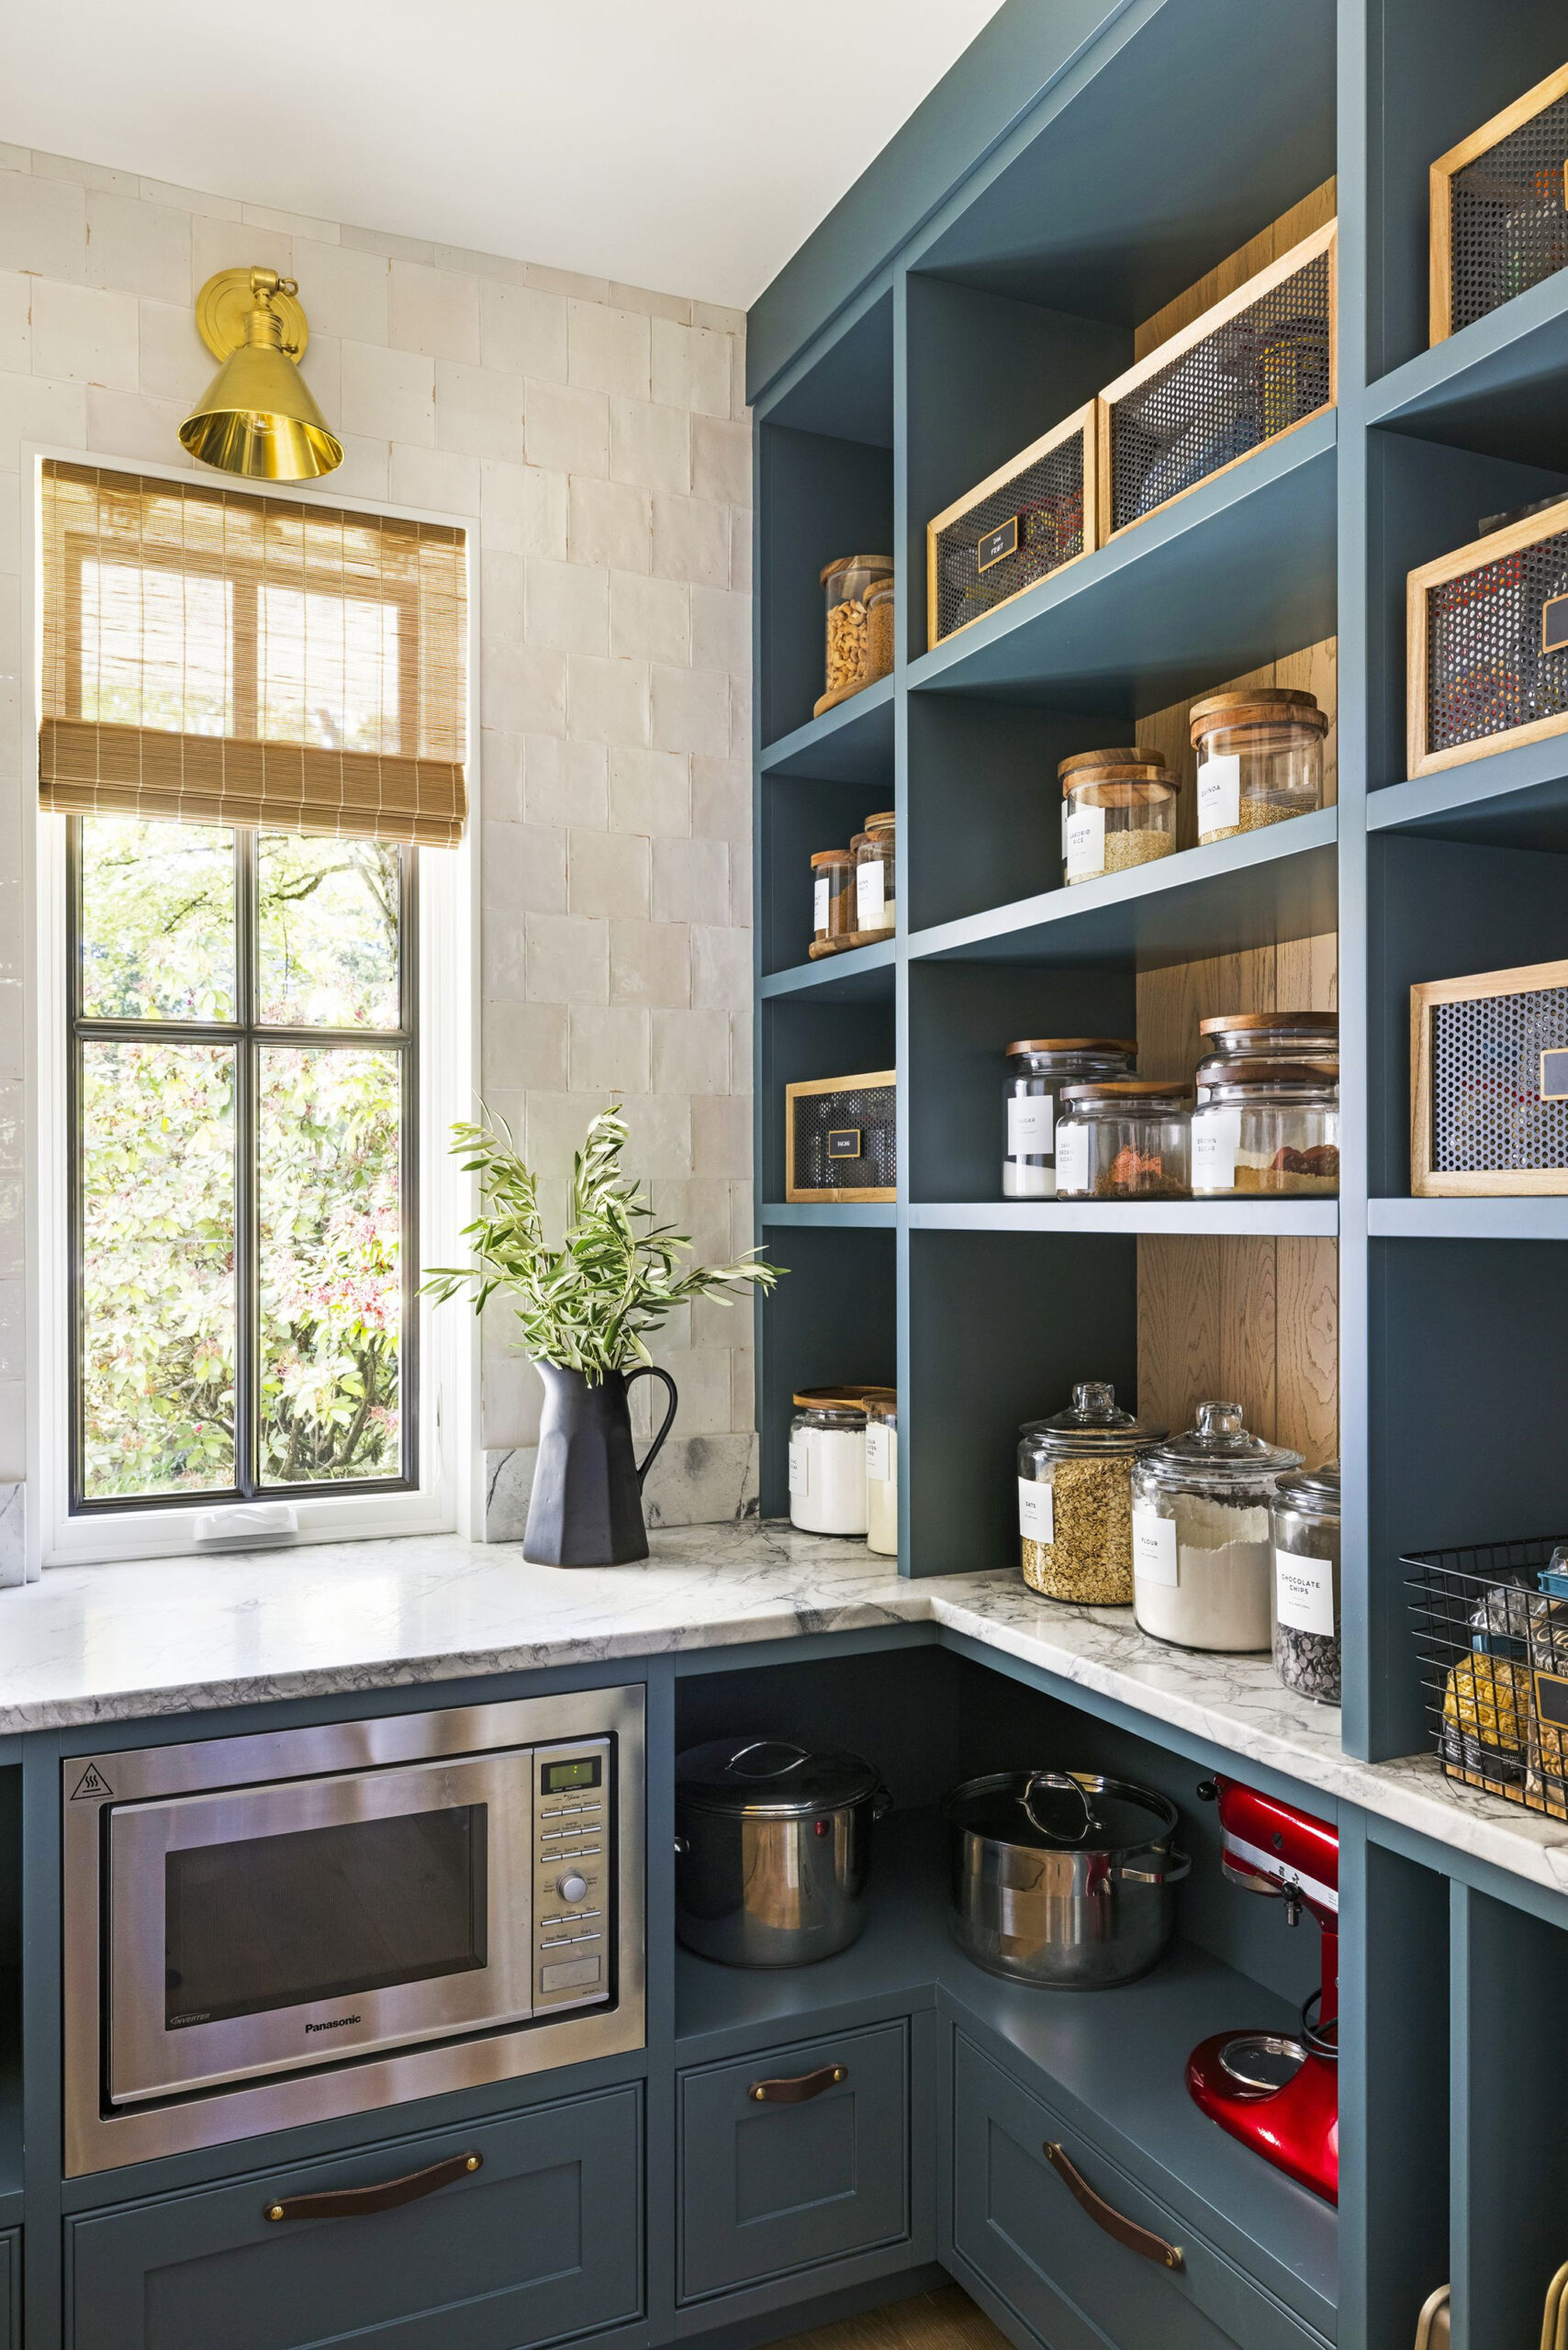 70 Best Small Kitchen Design Ideas - Small Kitchen Layout Photos for Kitchen Room Design